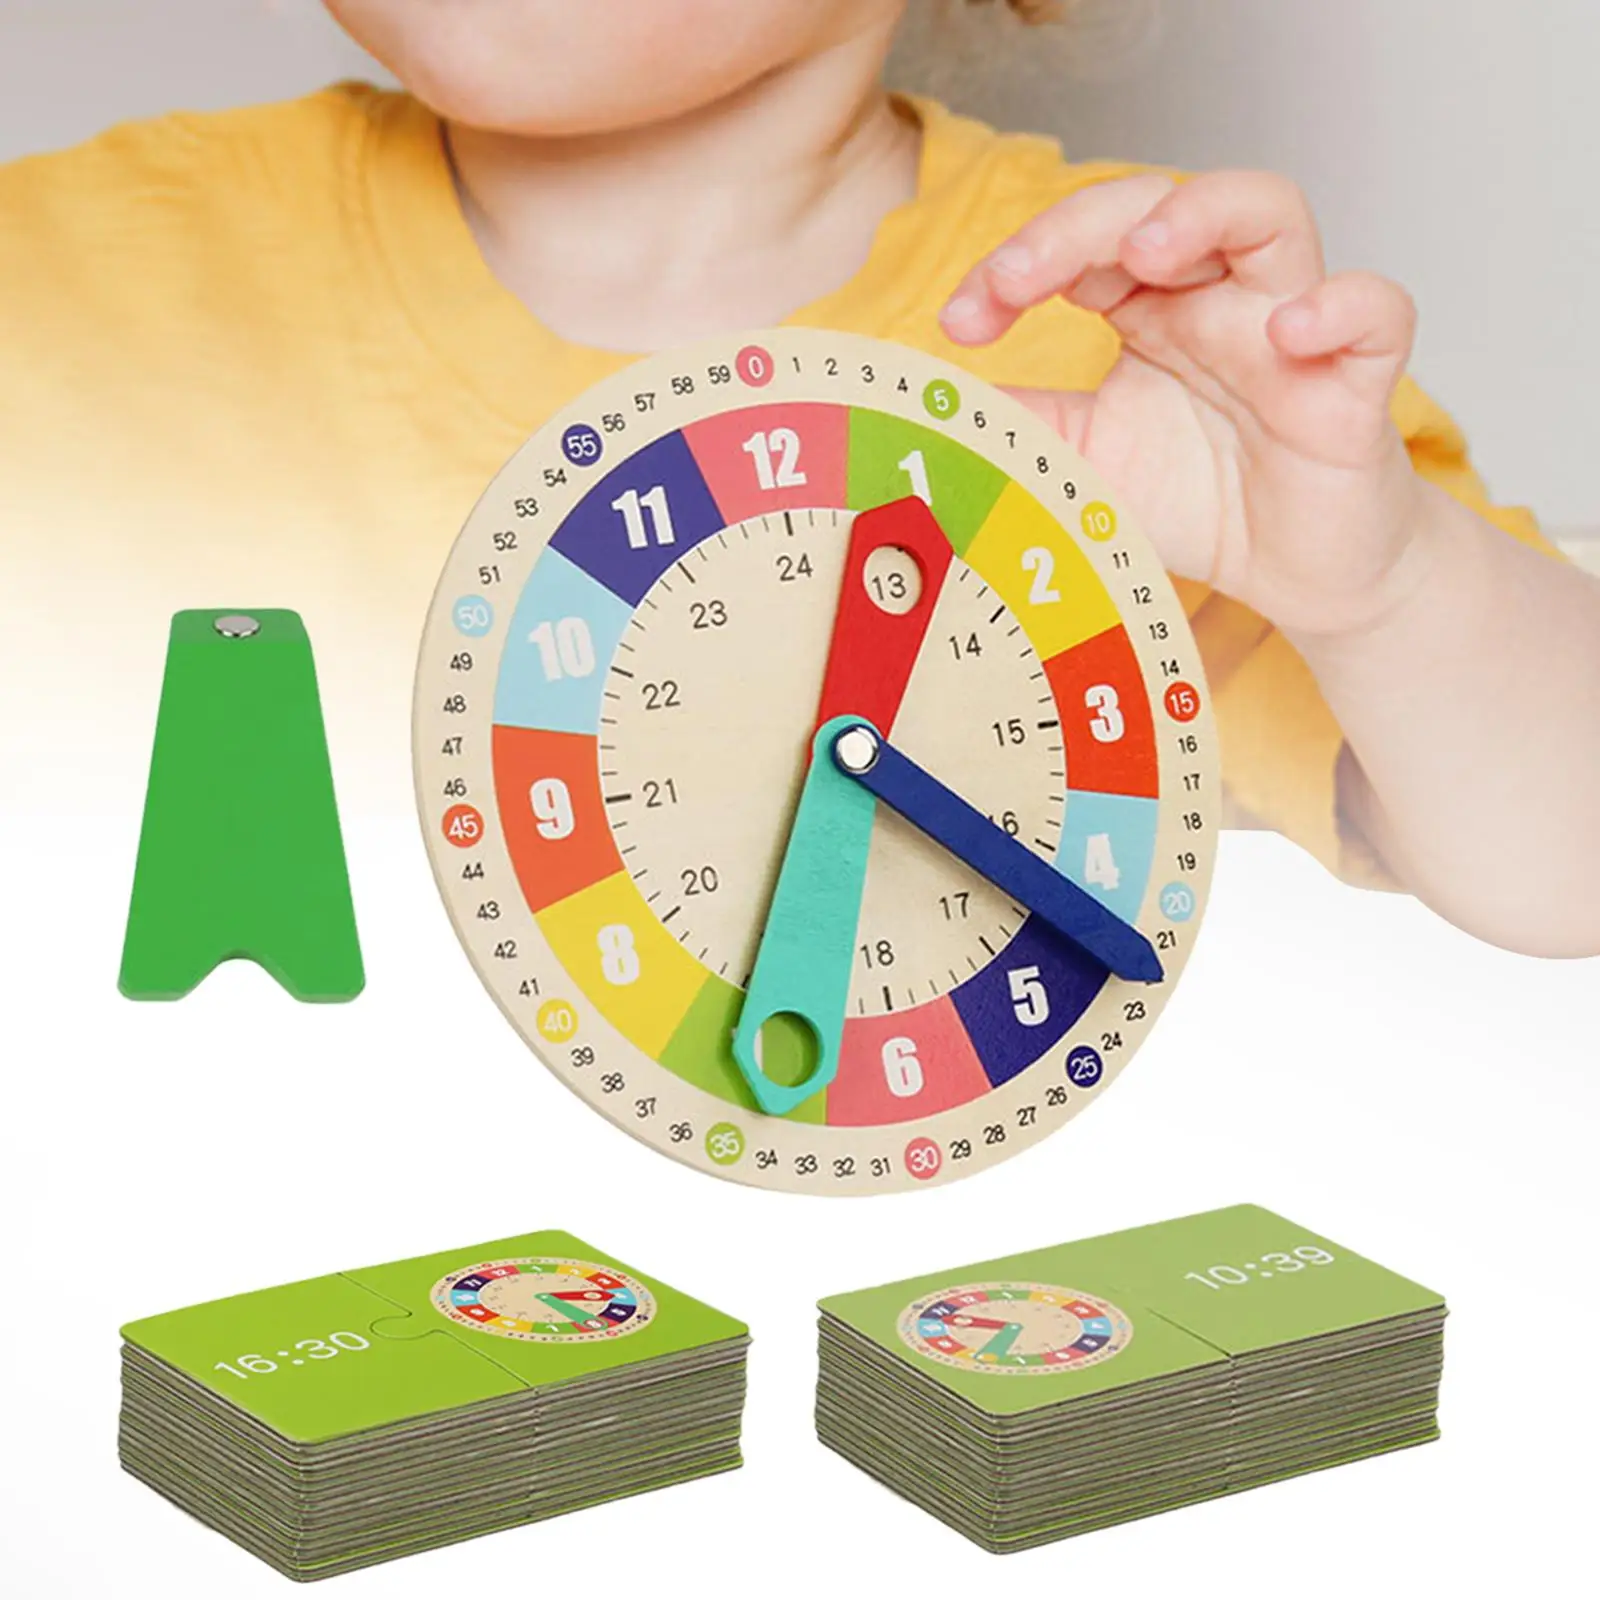 Wooden Clock Kids Toys Life Skills Training Games Teaching Aids for Children